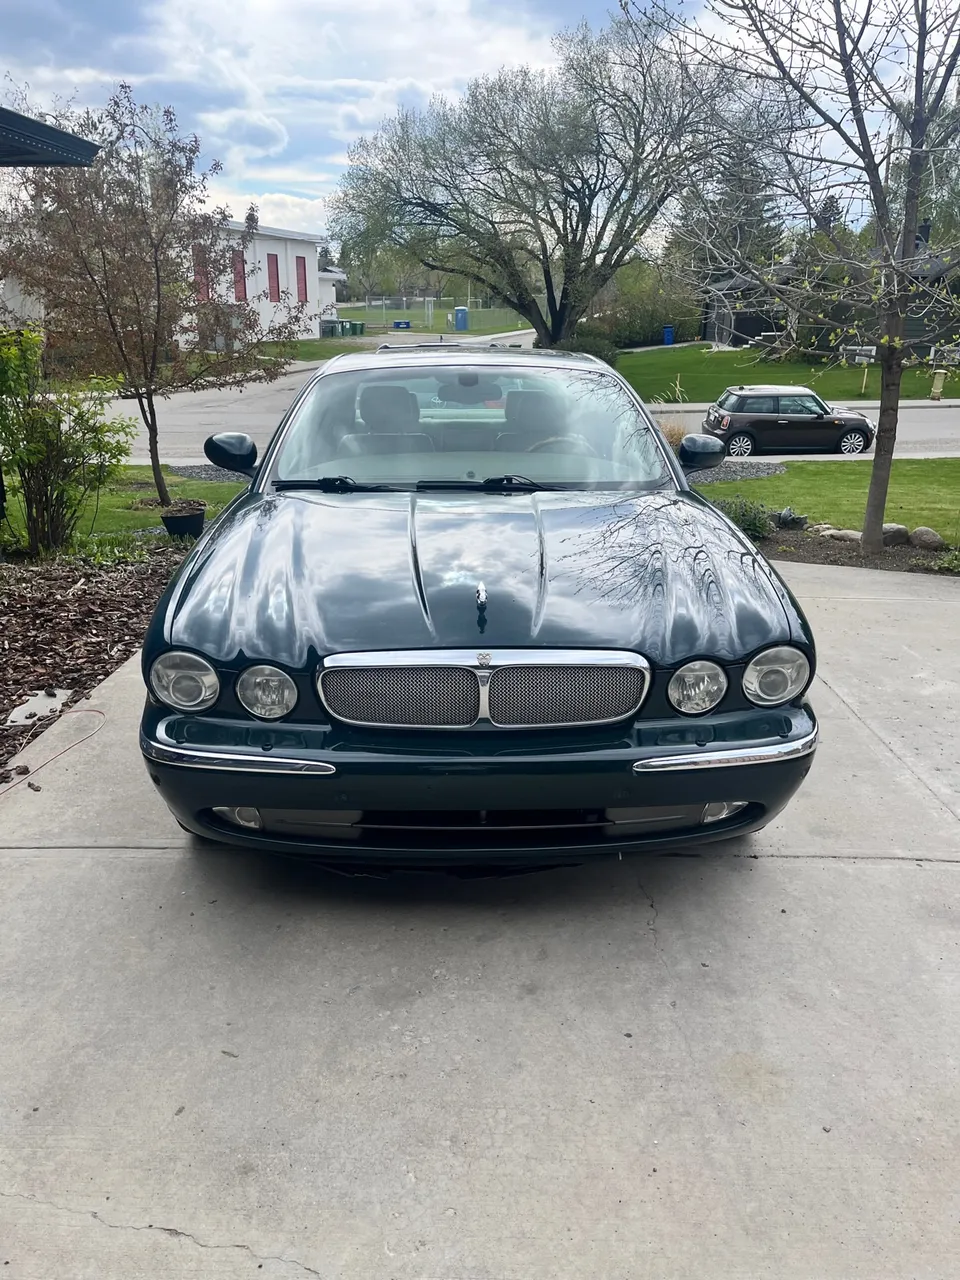 2004 jaguar xj8 (automatic)